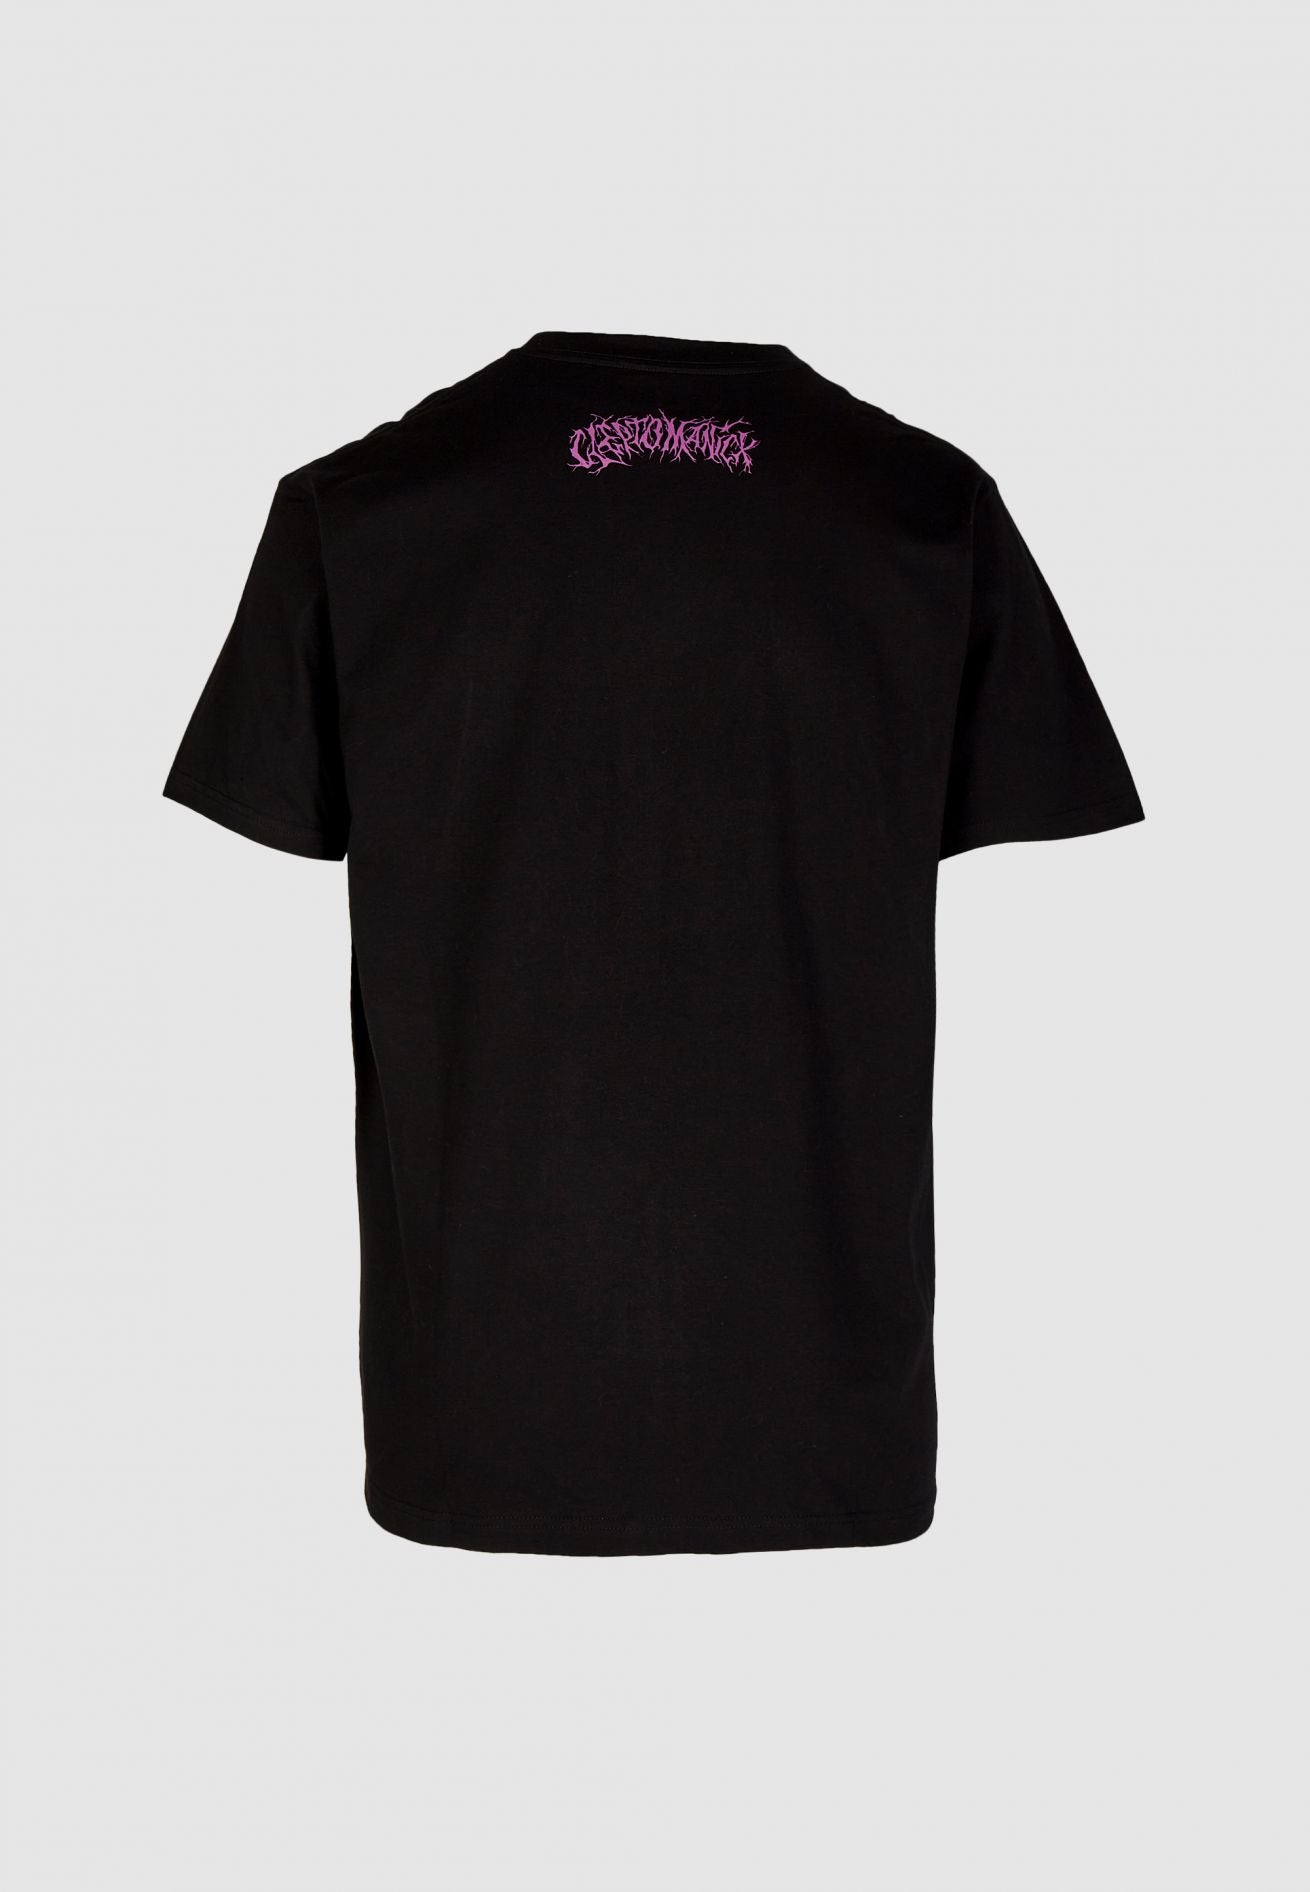 Cleptomanicx Demon Ravers T-Shirt - Black